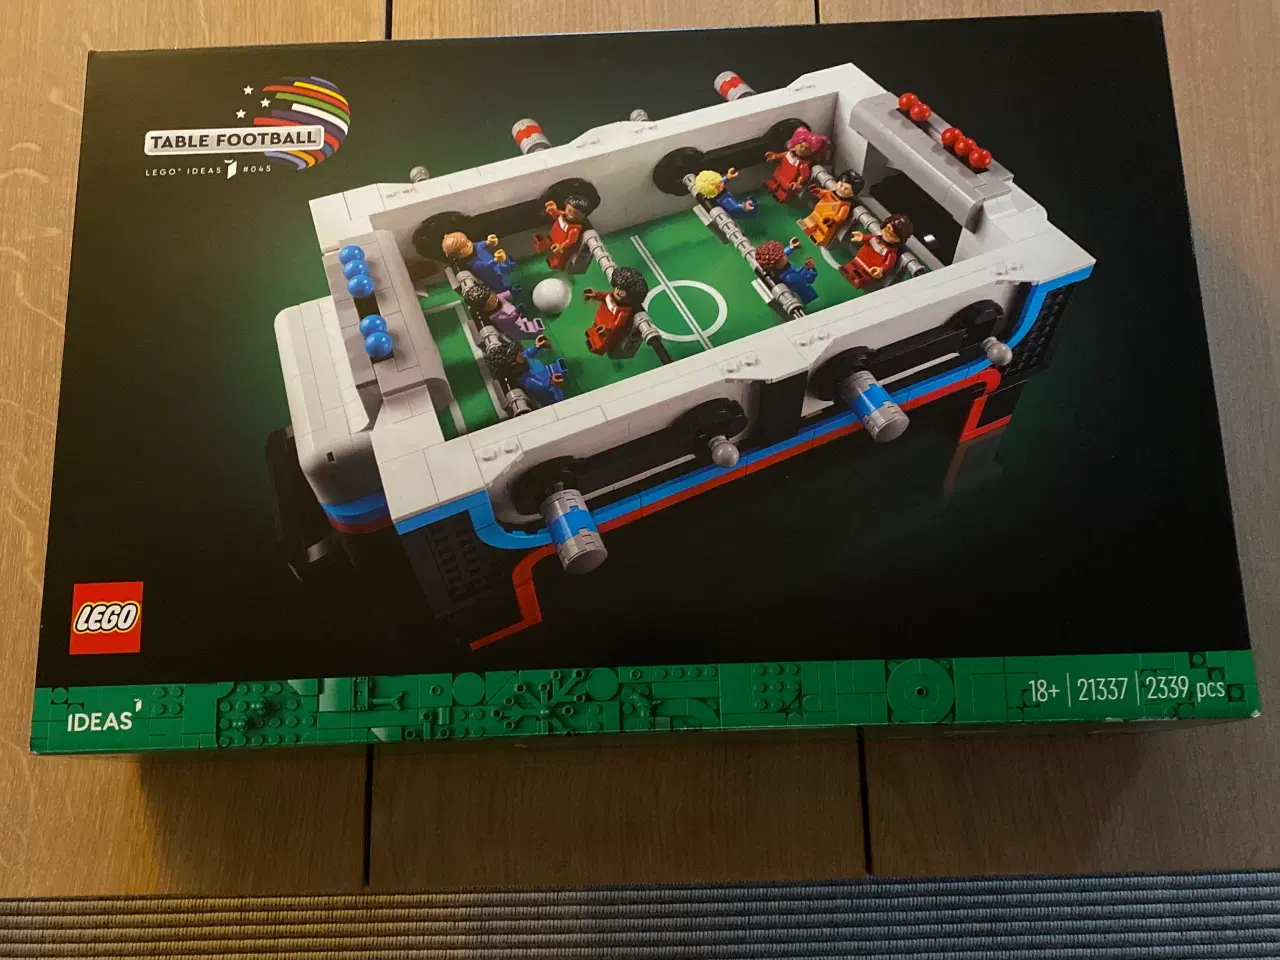 Billede 1 - Lego Table Football